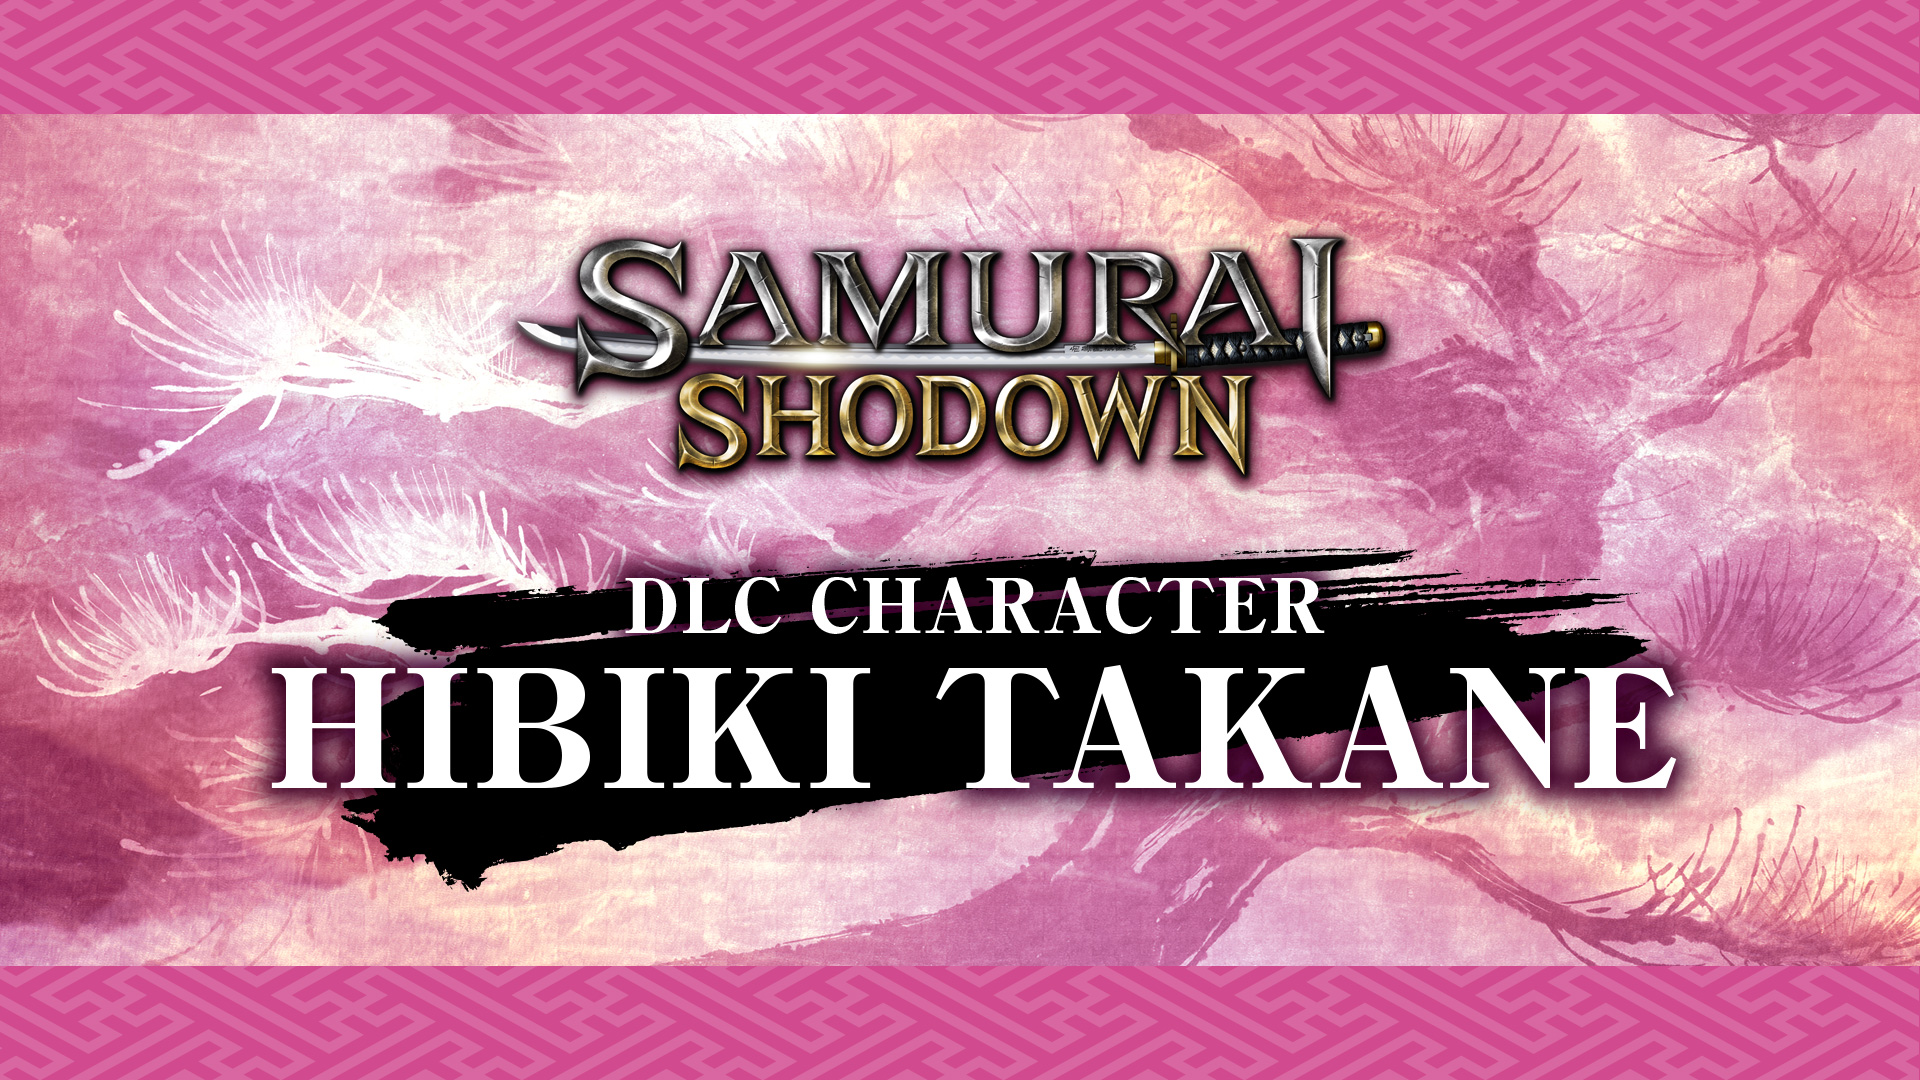 SAMURAI SHODOWN: CHARACTER "HIBIKI TAKANE"